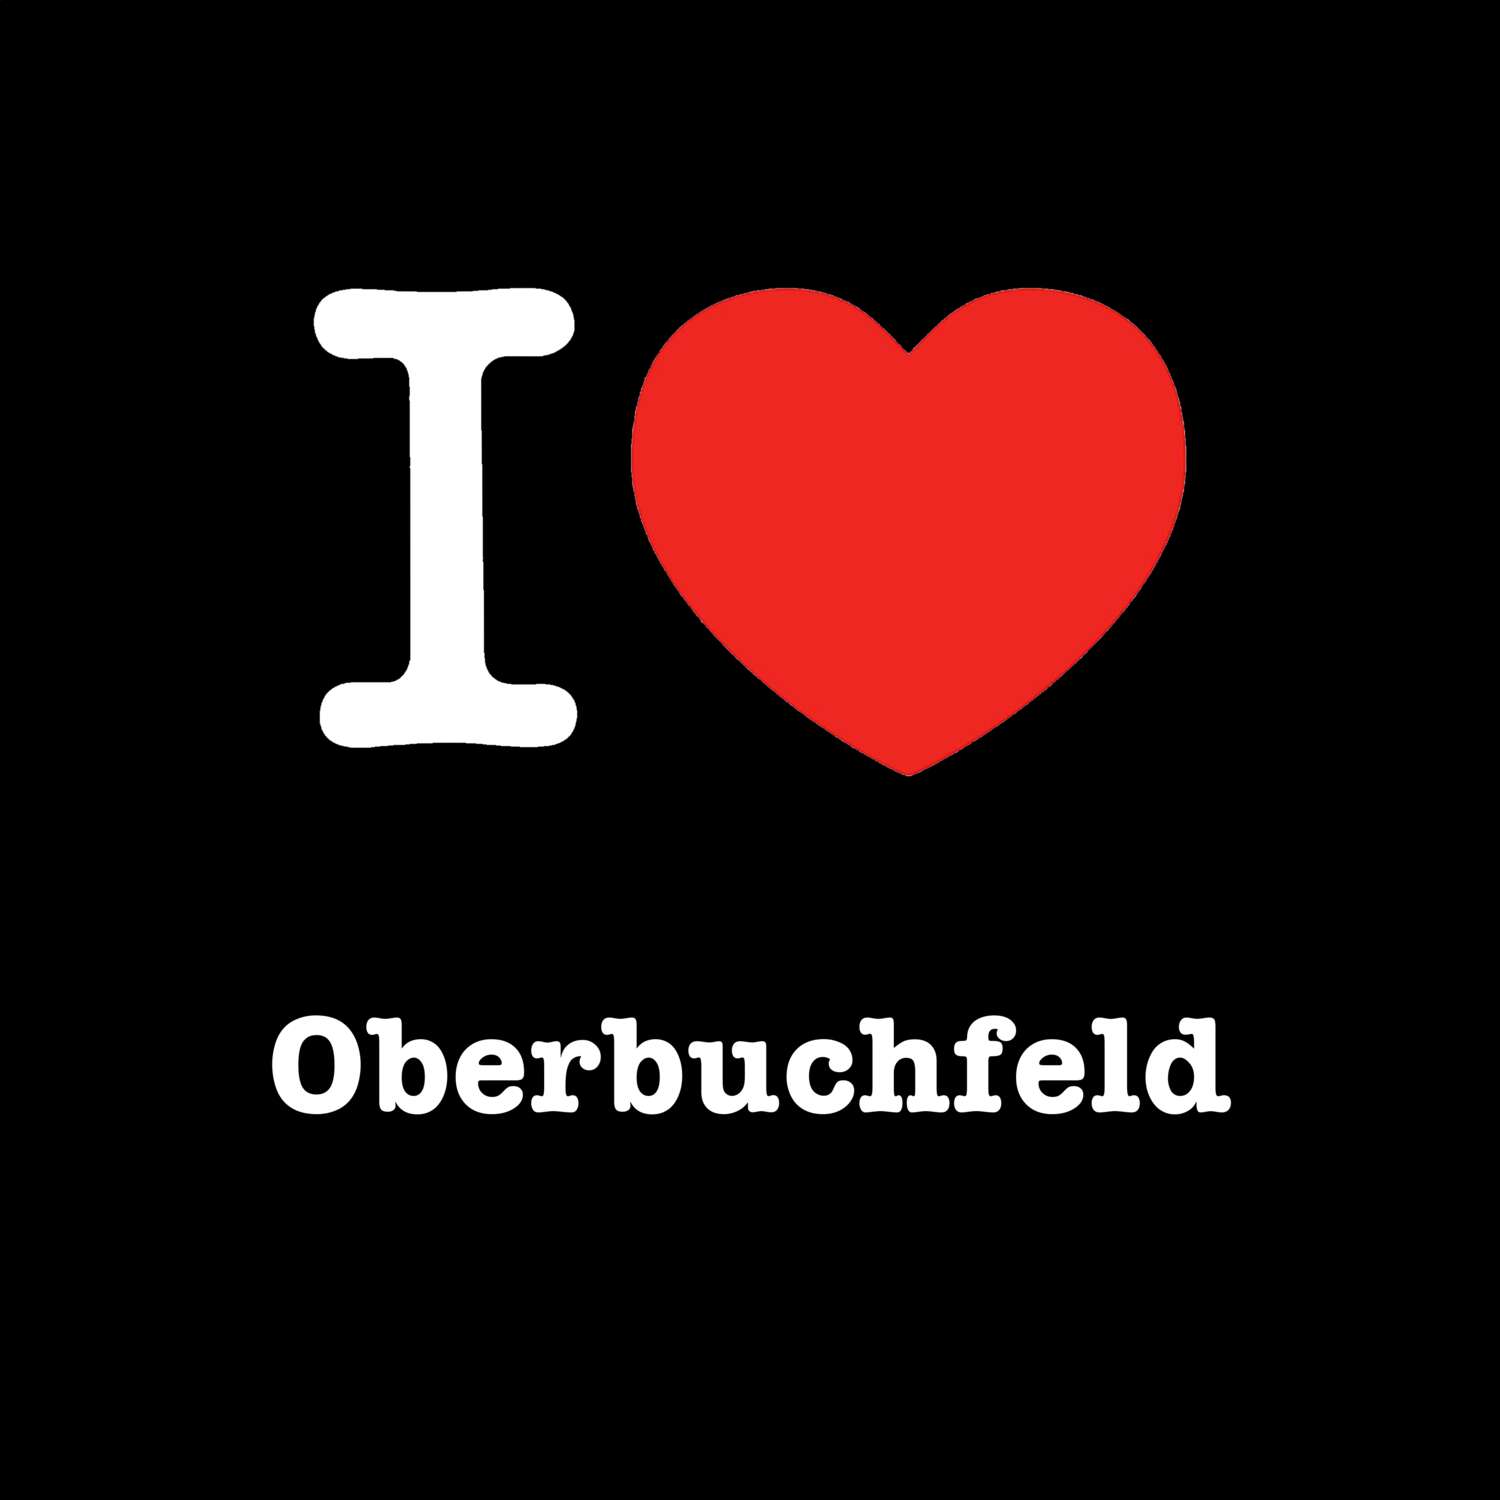 Oberbuchfeld T-Shirt »I love«